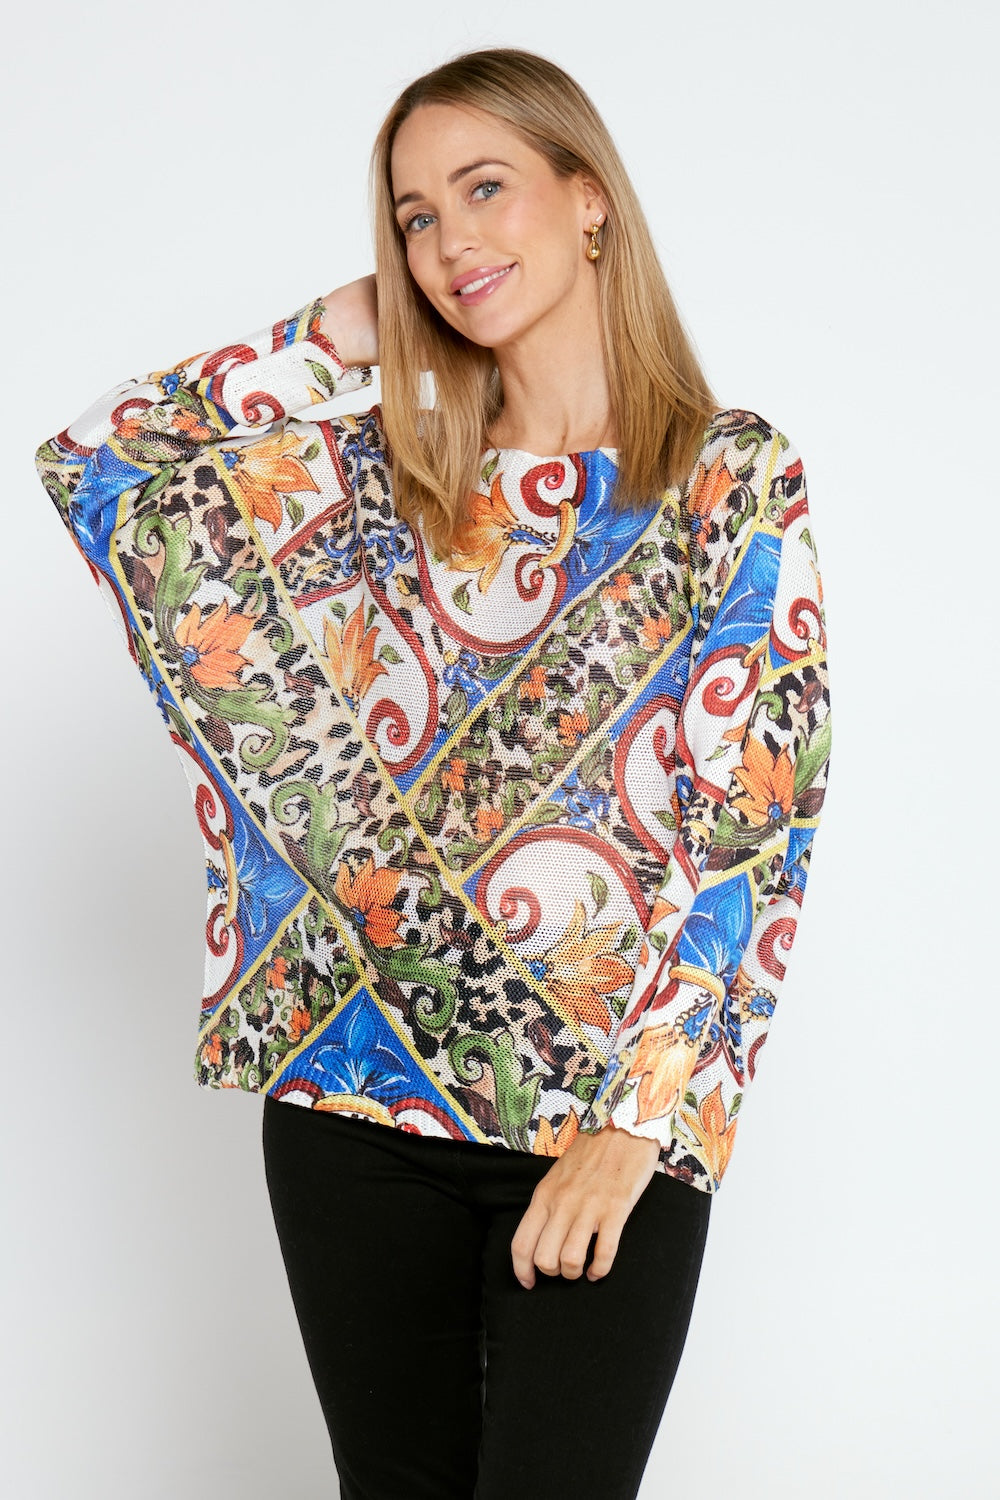 Cassidy Knit Top - Mediterranean Mosaic